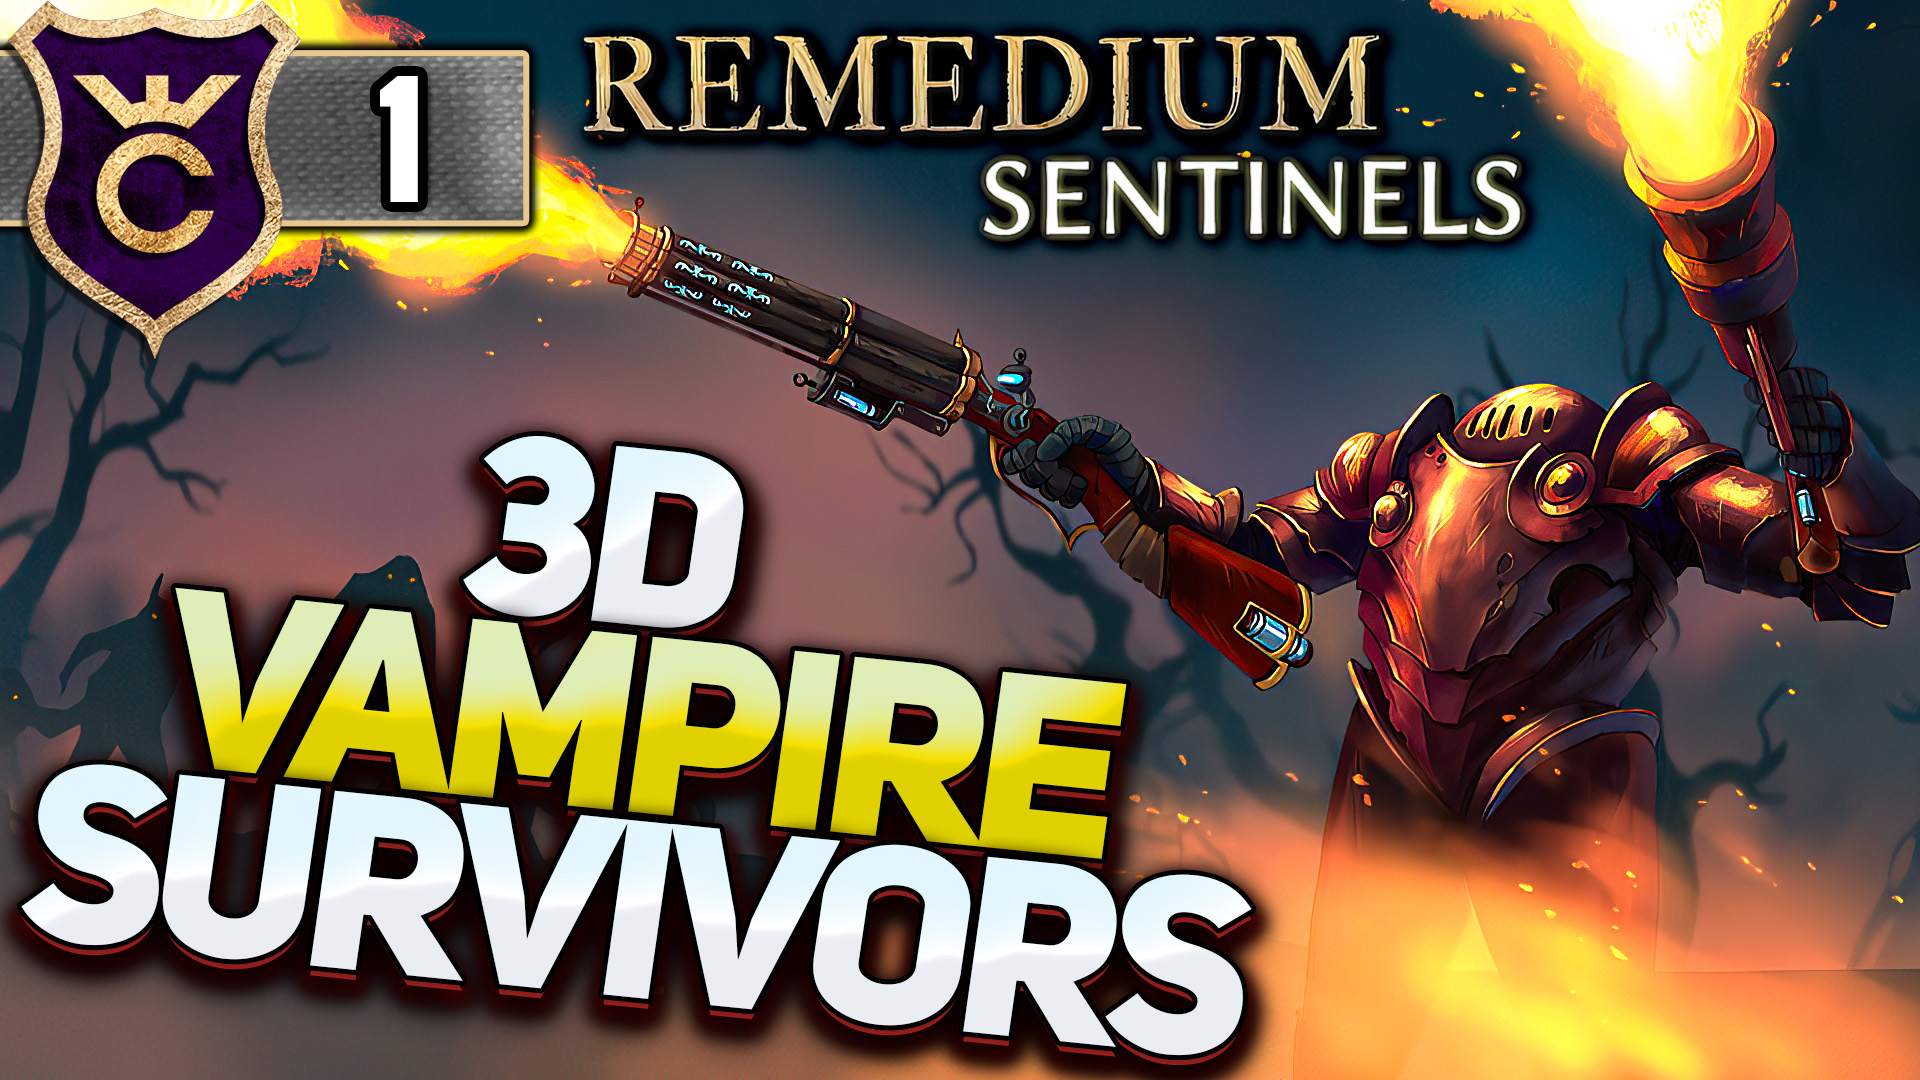 VAMPIRE SURVIVORS 3D! REMEDIUM Sentinels #1